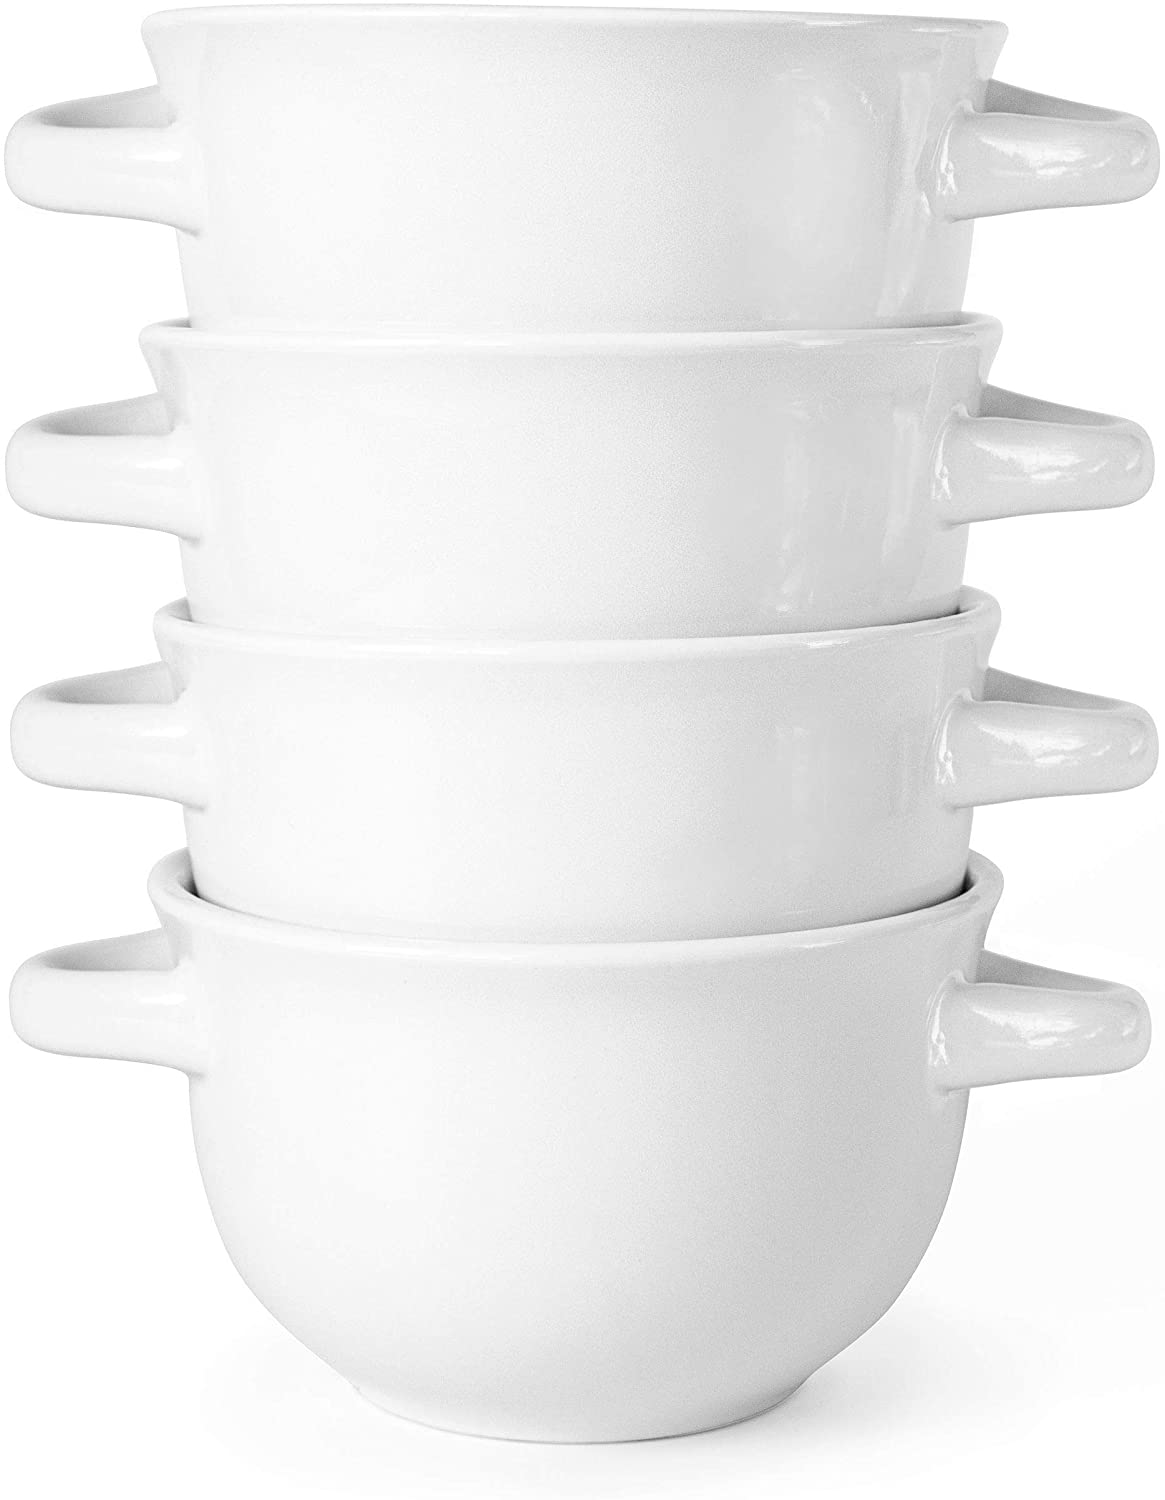 Kook Soup Bowls Crocks with Handles, 18 oz, Set of 4, White - Walmart.com